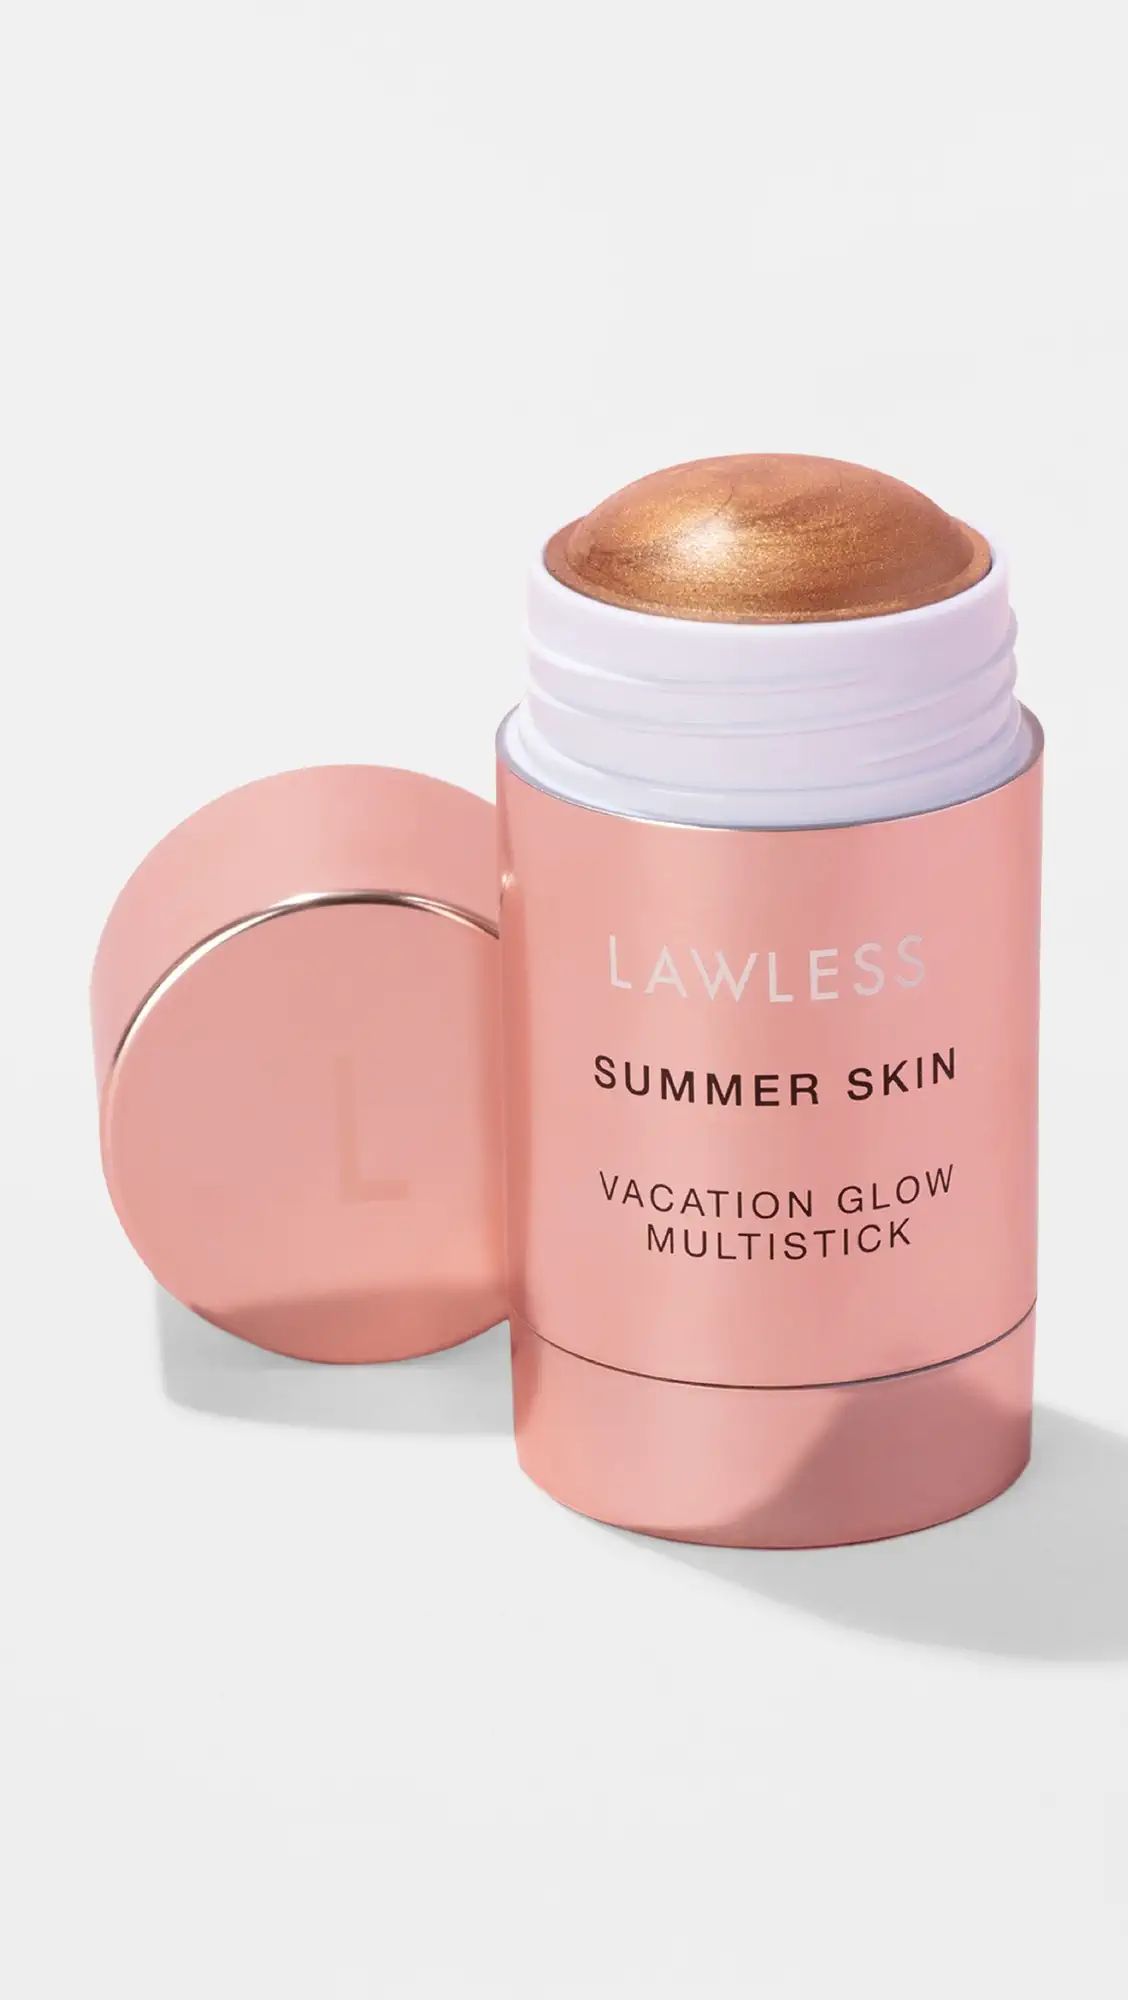 LAWLESS Summer Skin Vacation Glow Multistick | Shopbop | Shopbop